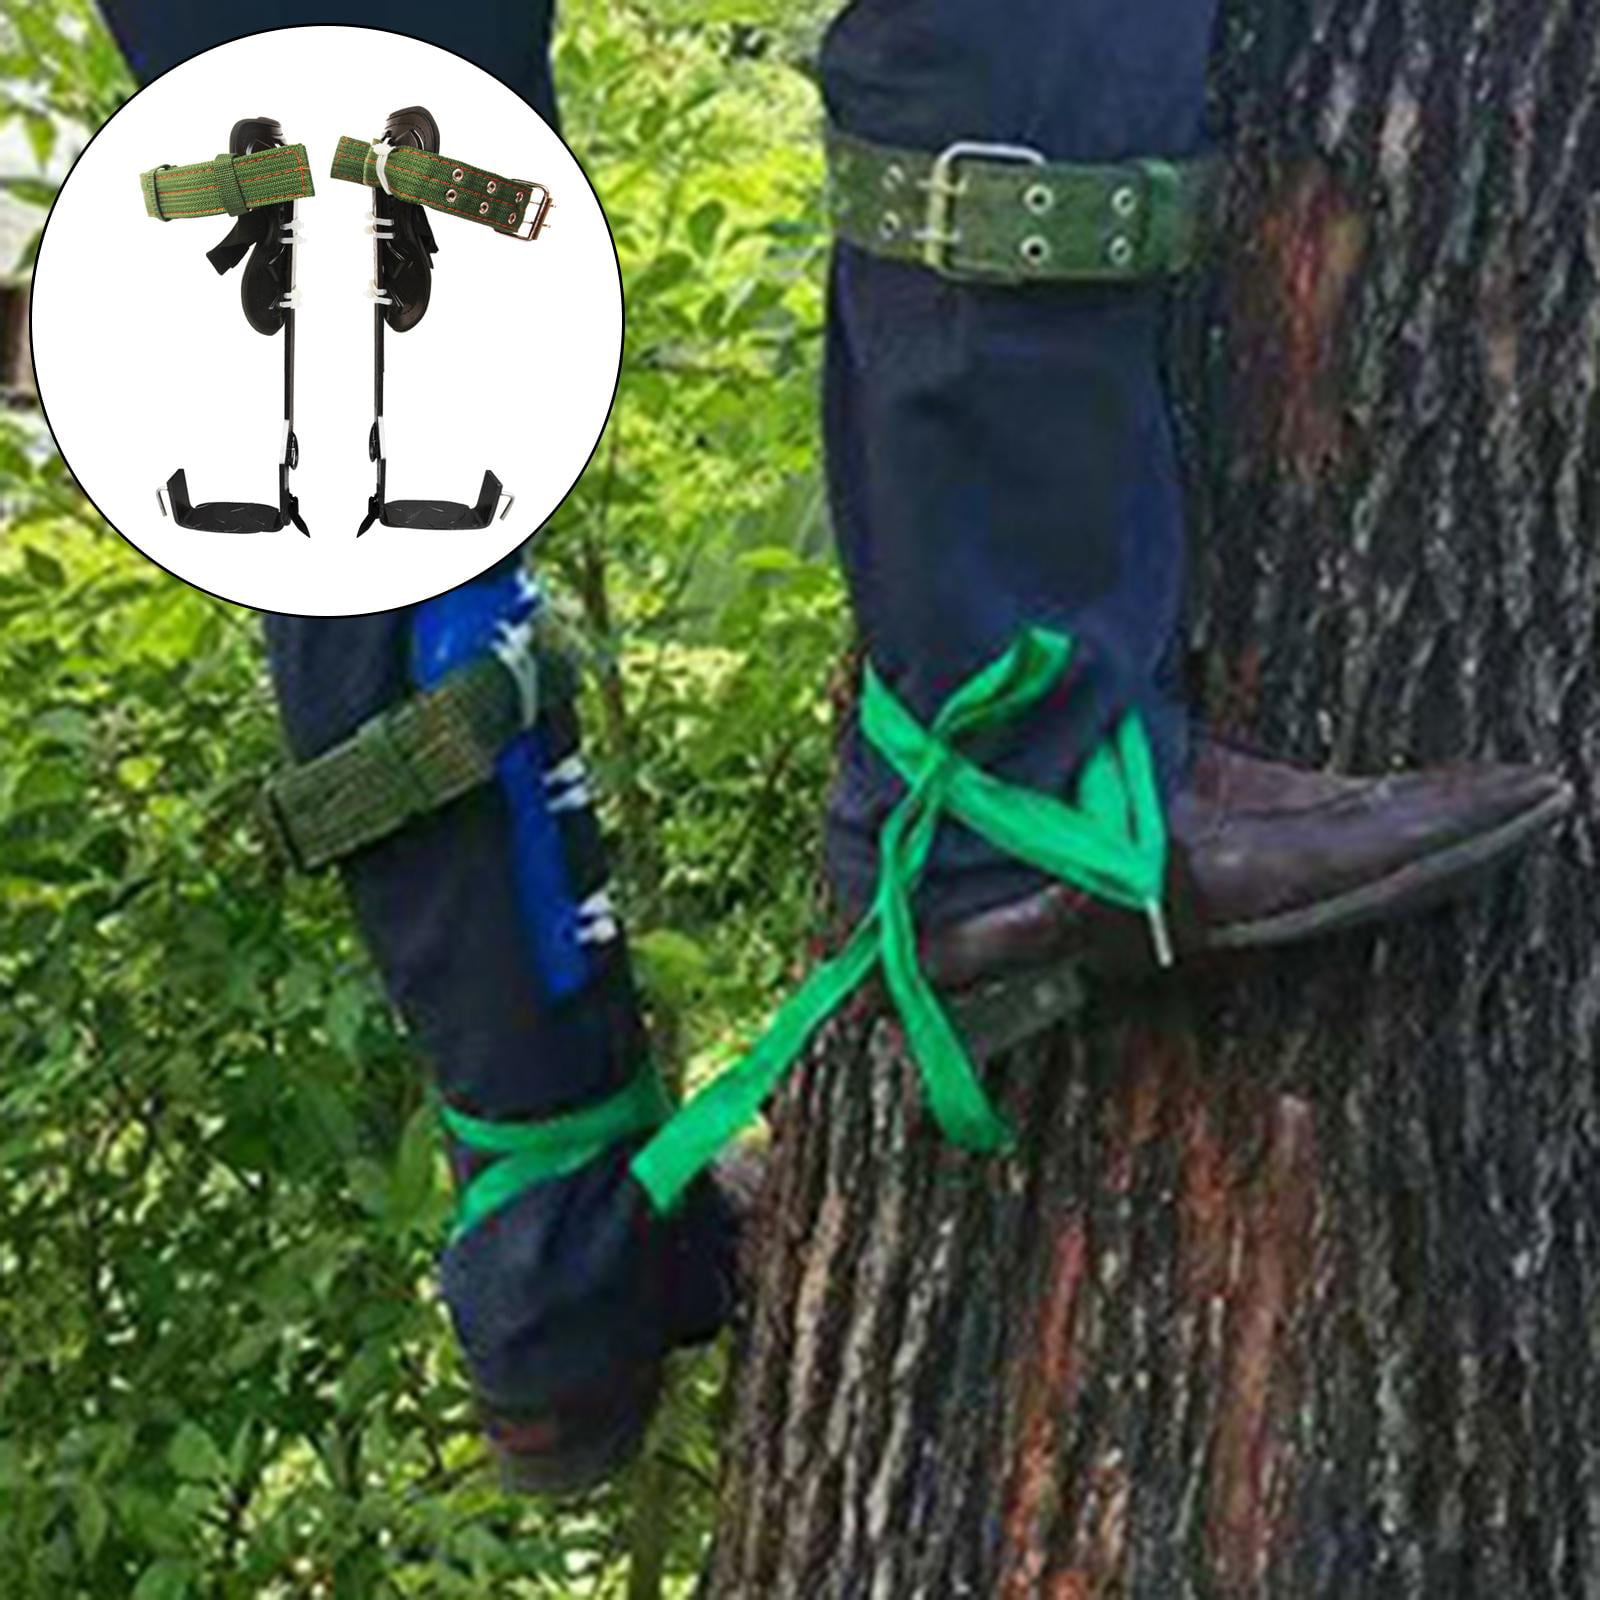 Tree/Pole Climbing Spike Safe Belt Strap Adj.Lanyard Rope Rescue jungle survival 